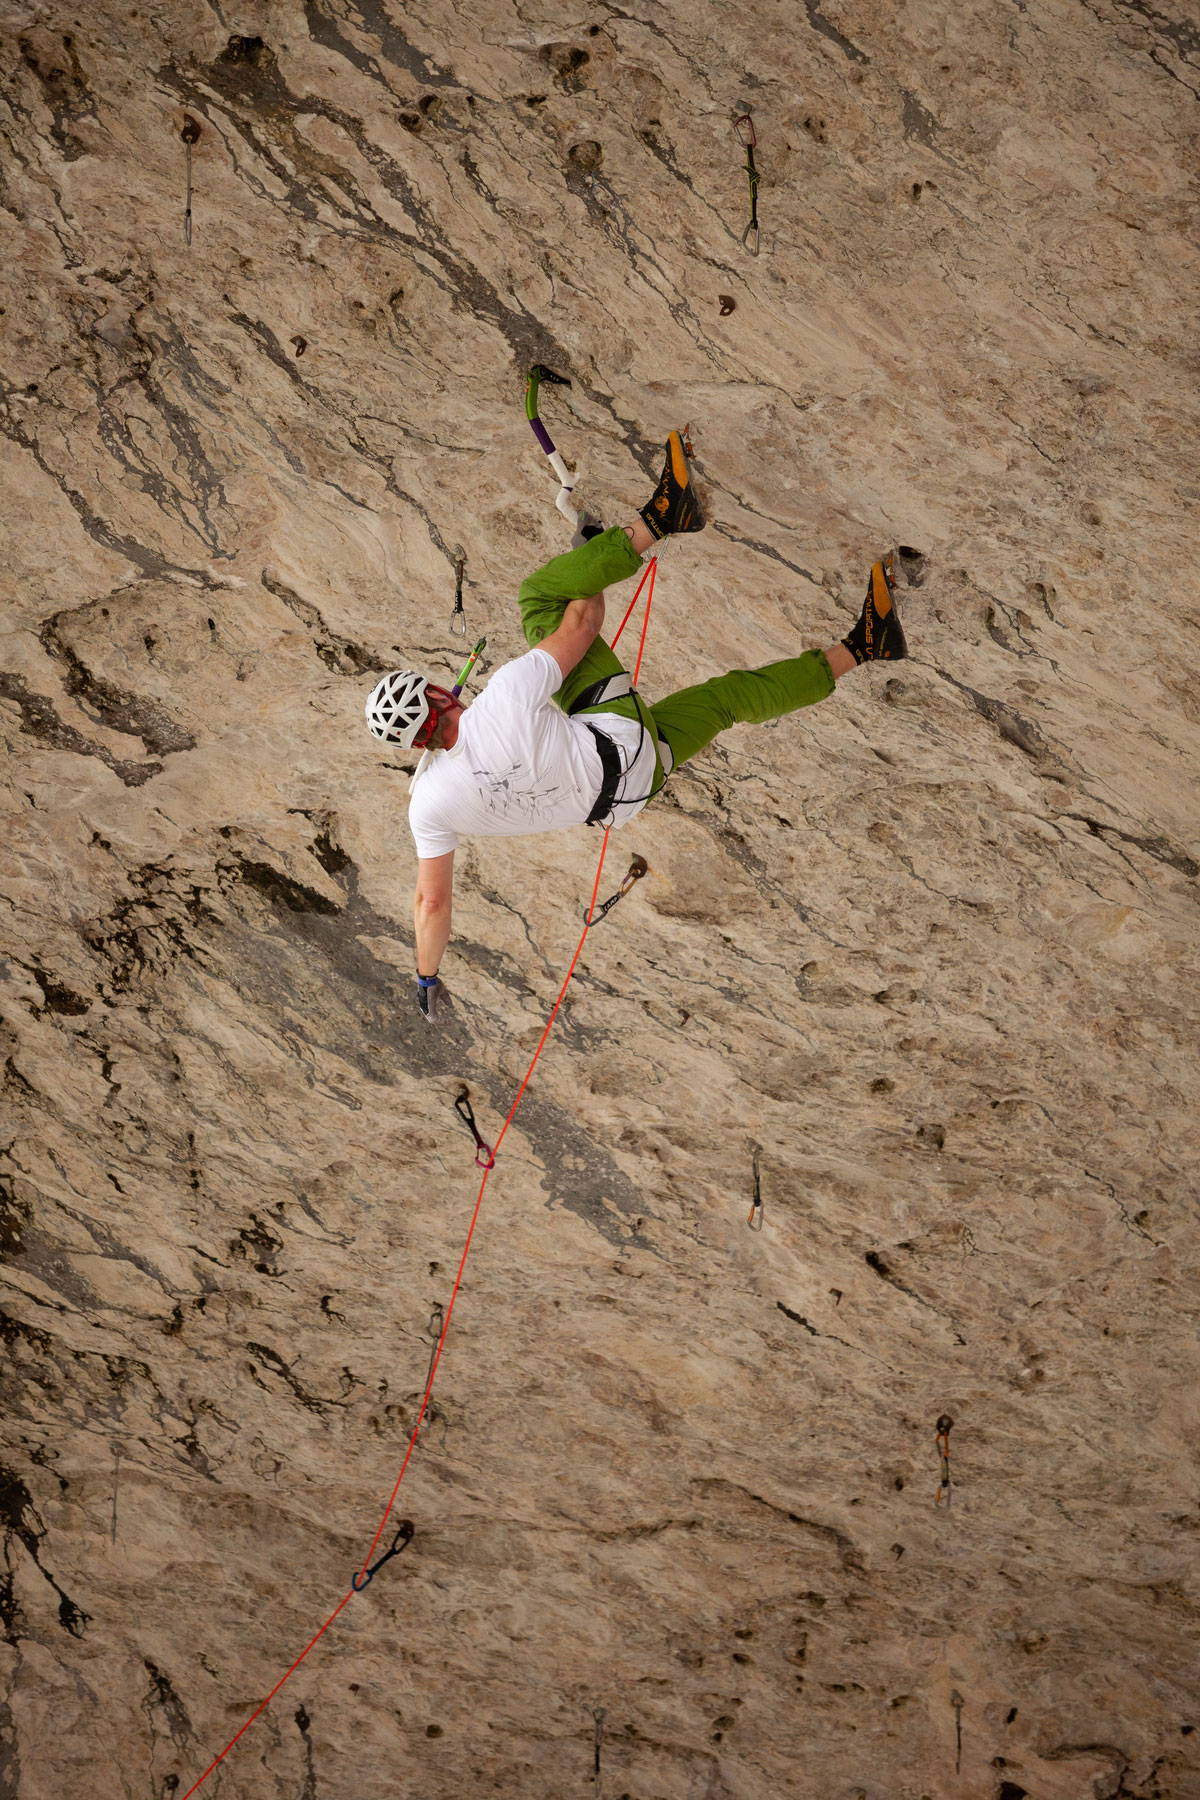 Rock climber climbing upwards along the tan rocks